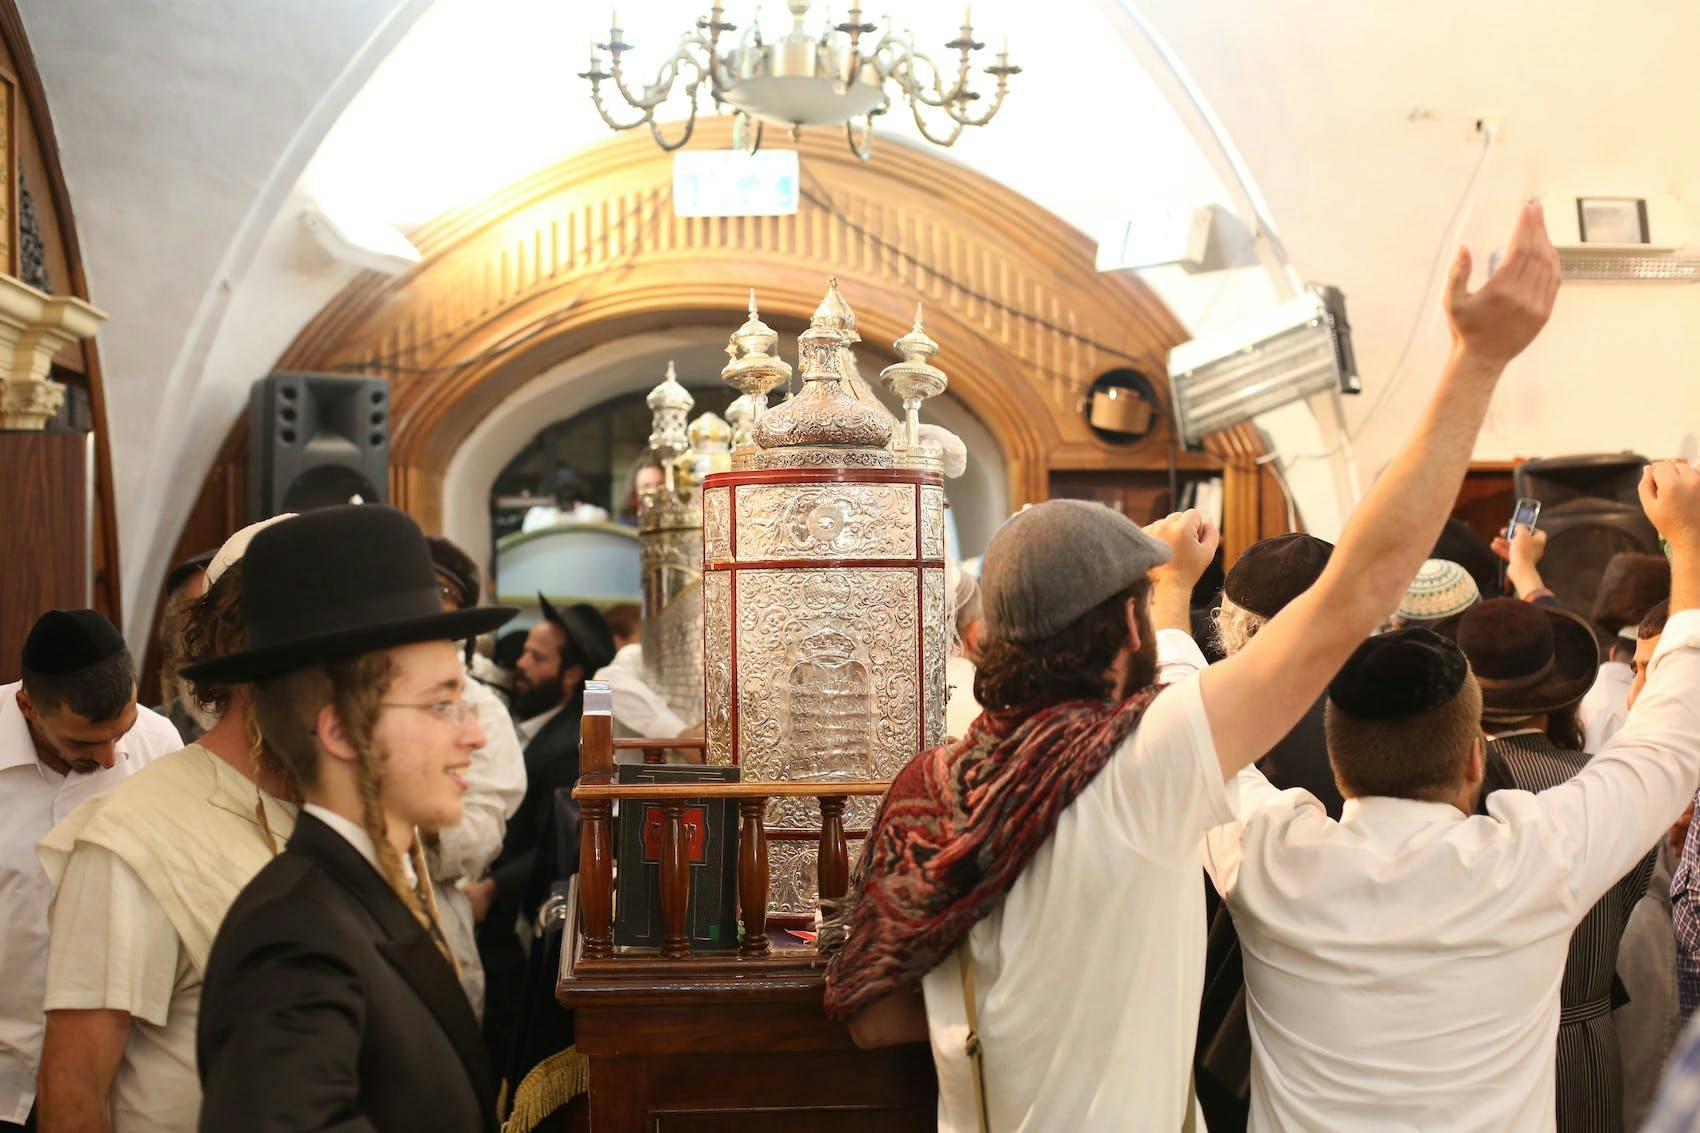 Sukkot Celebration